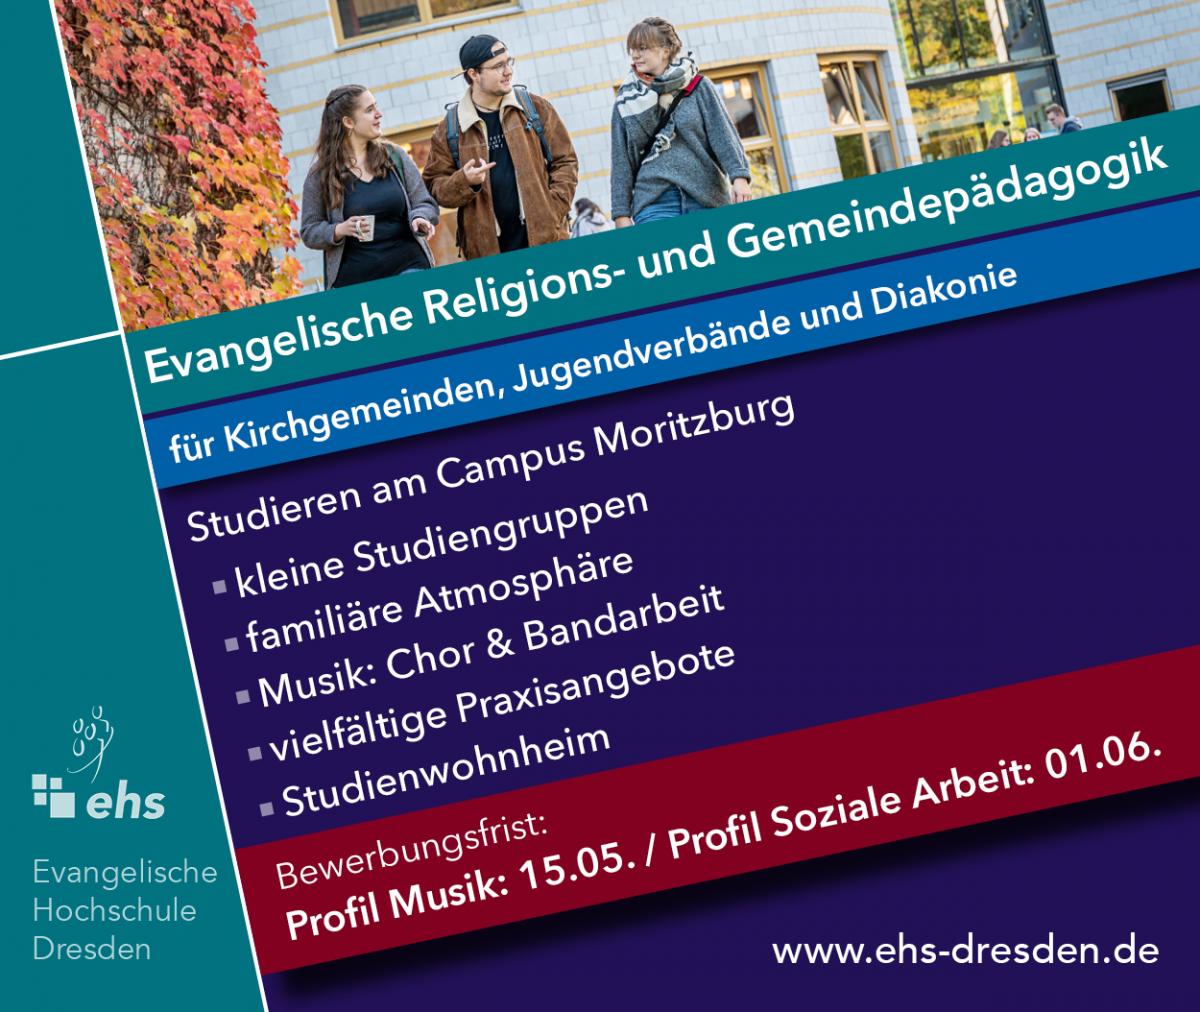 ehs Evangelische Hochschule Dresden